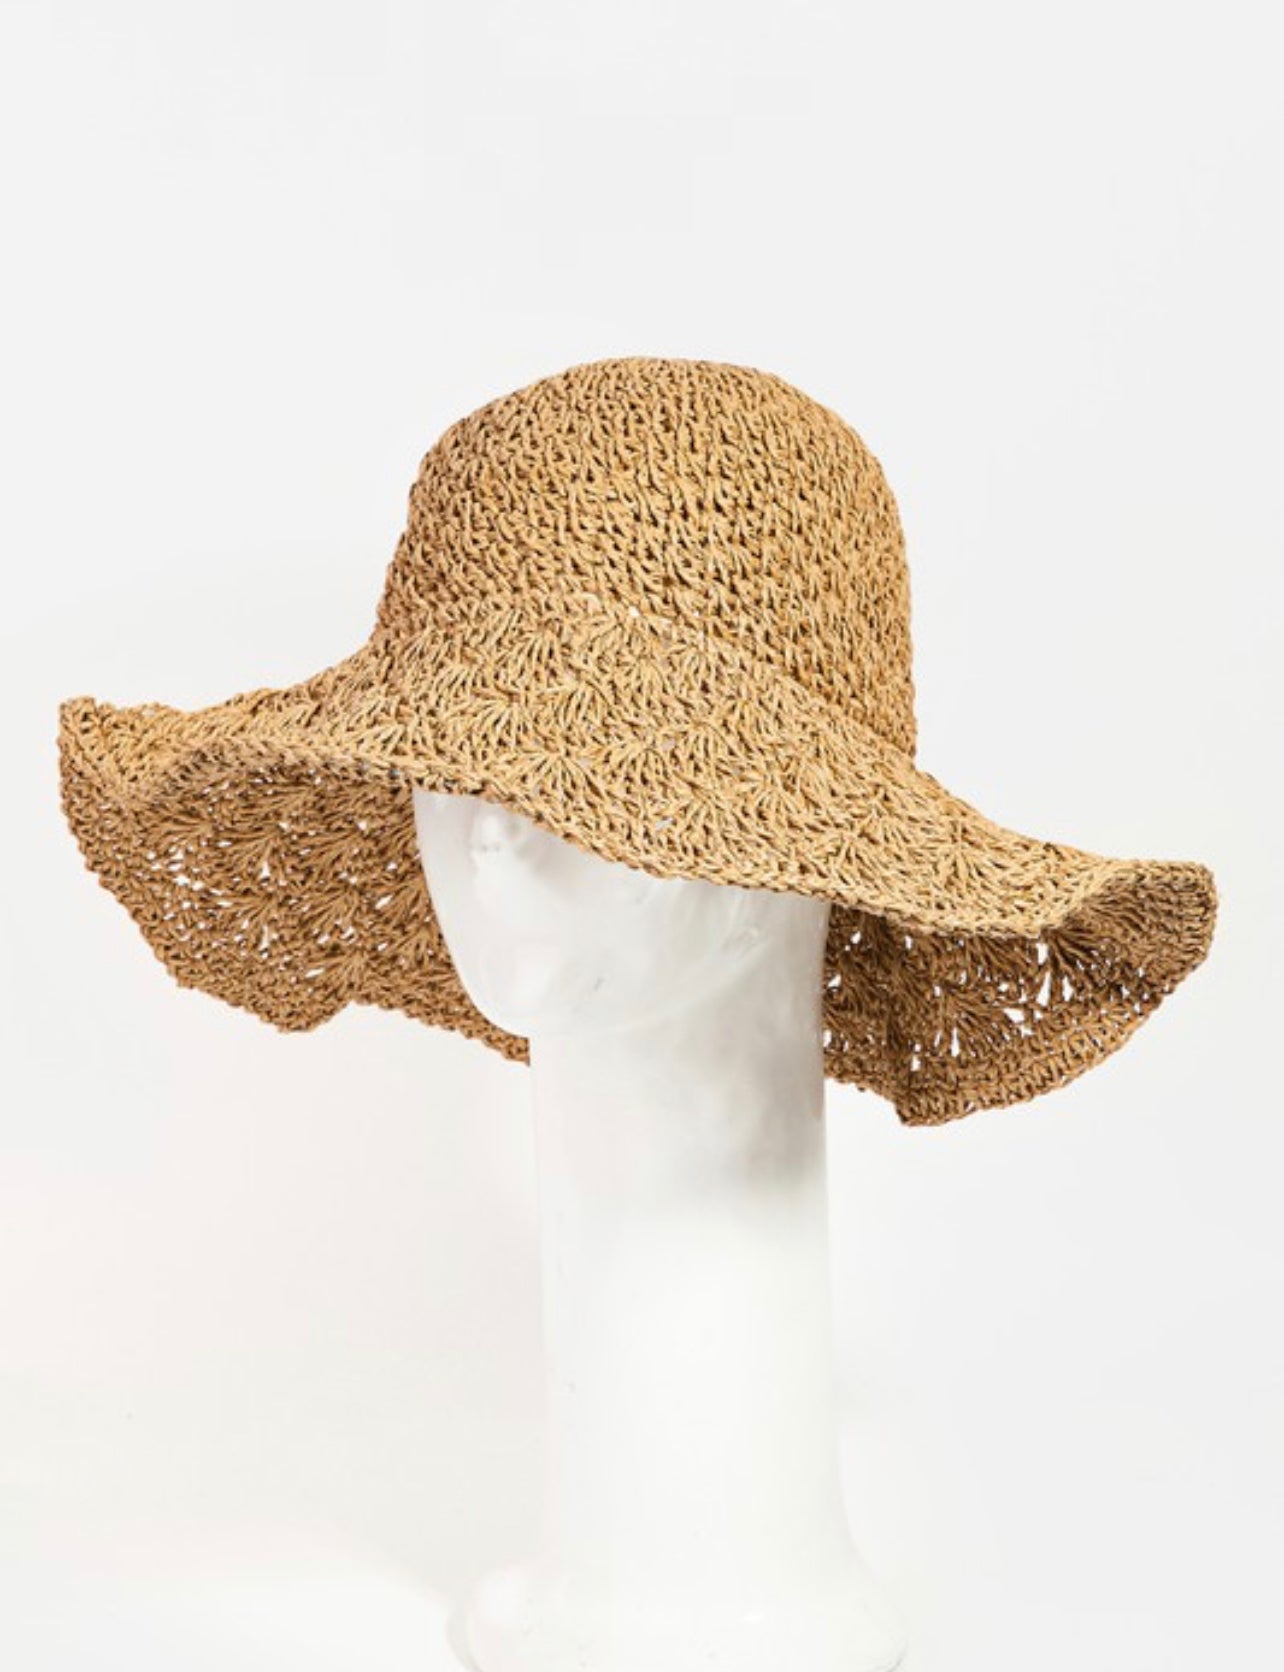 “Coronado” Straw Hat